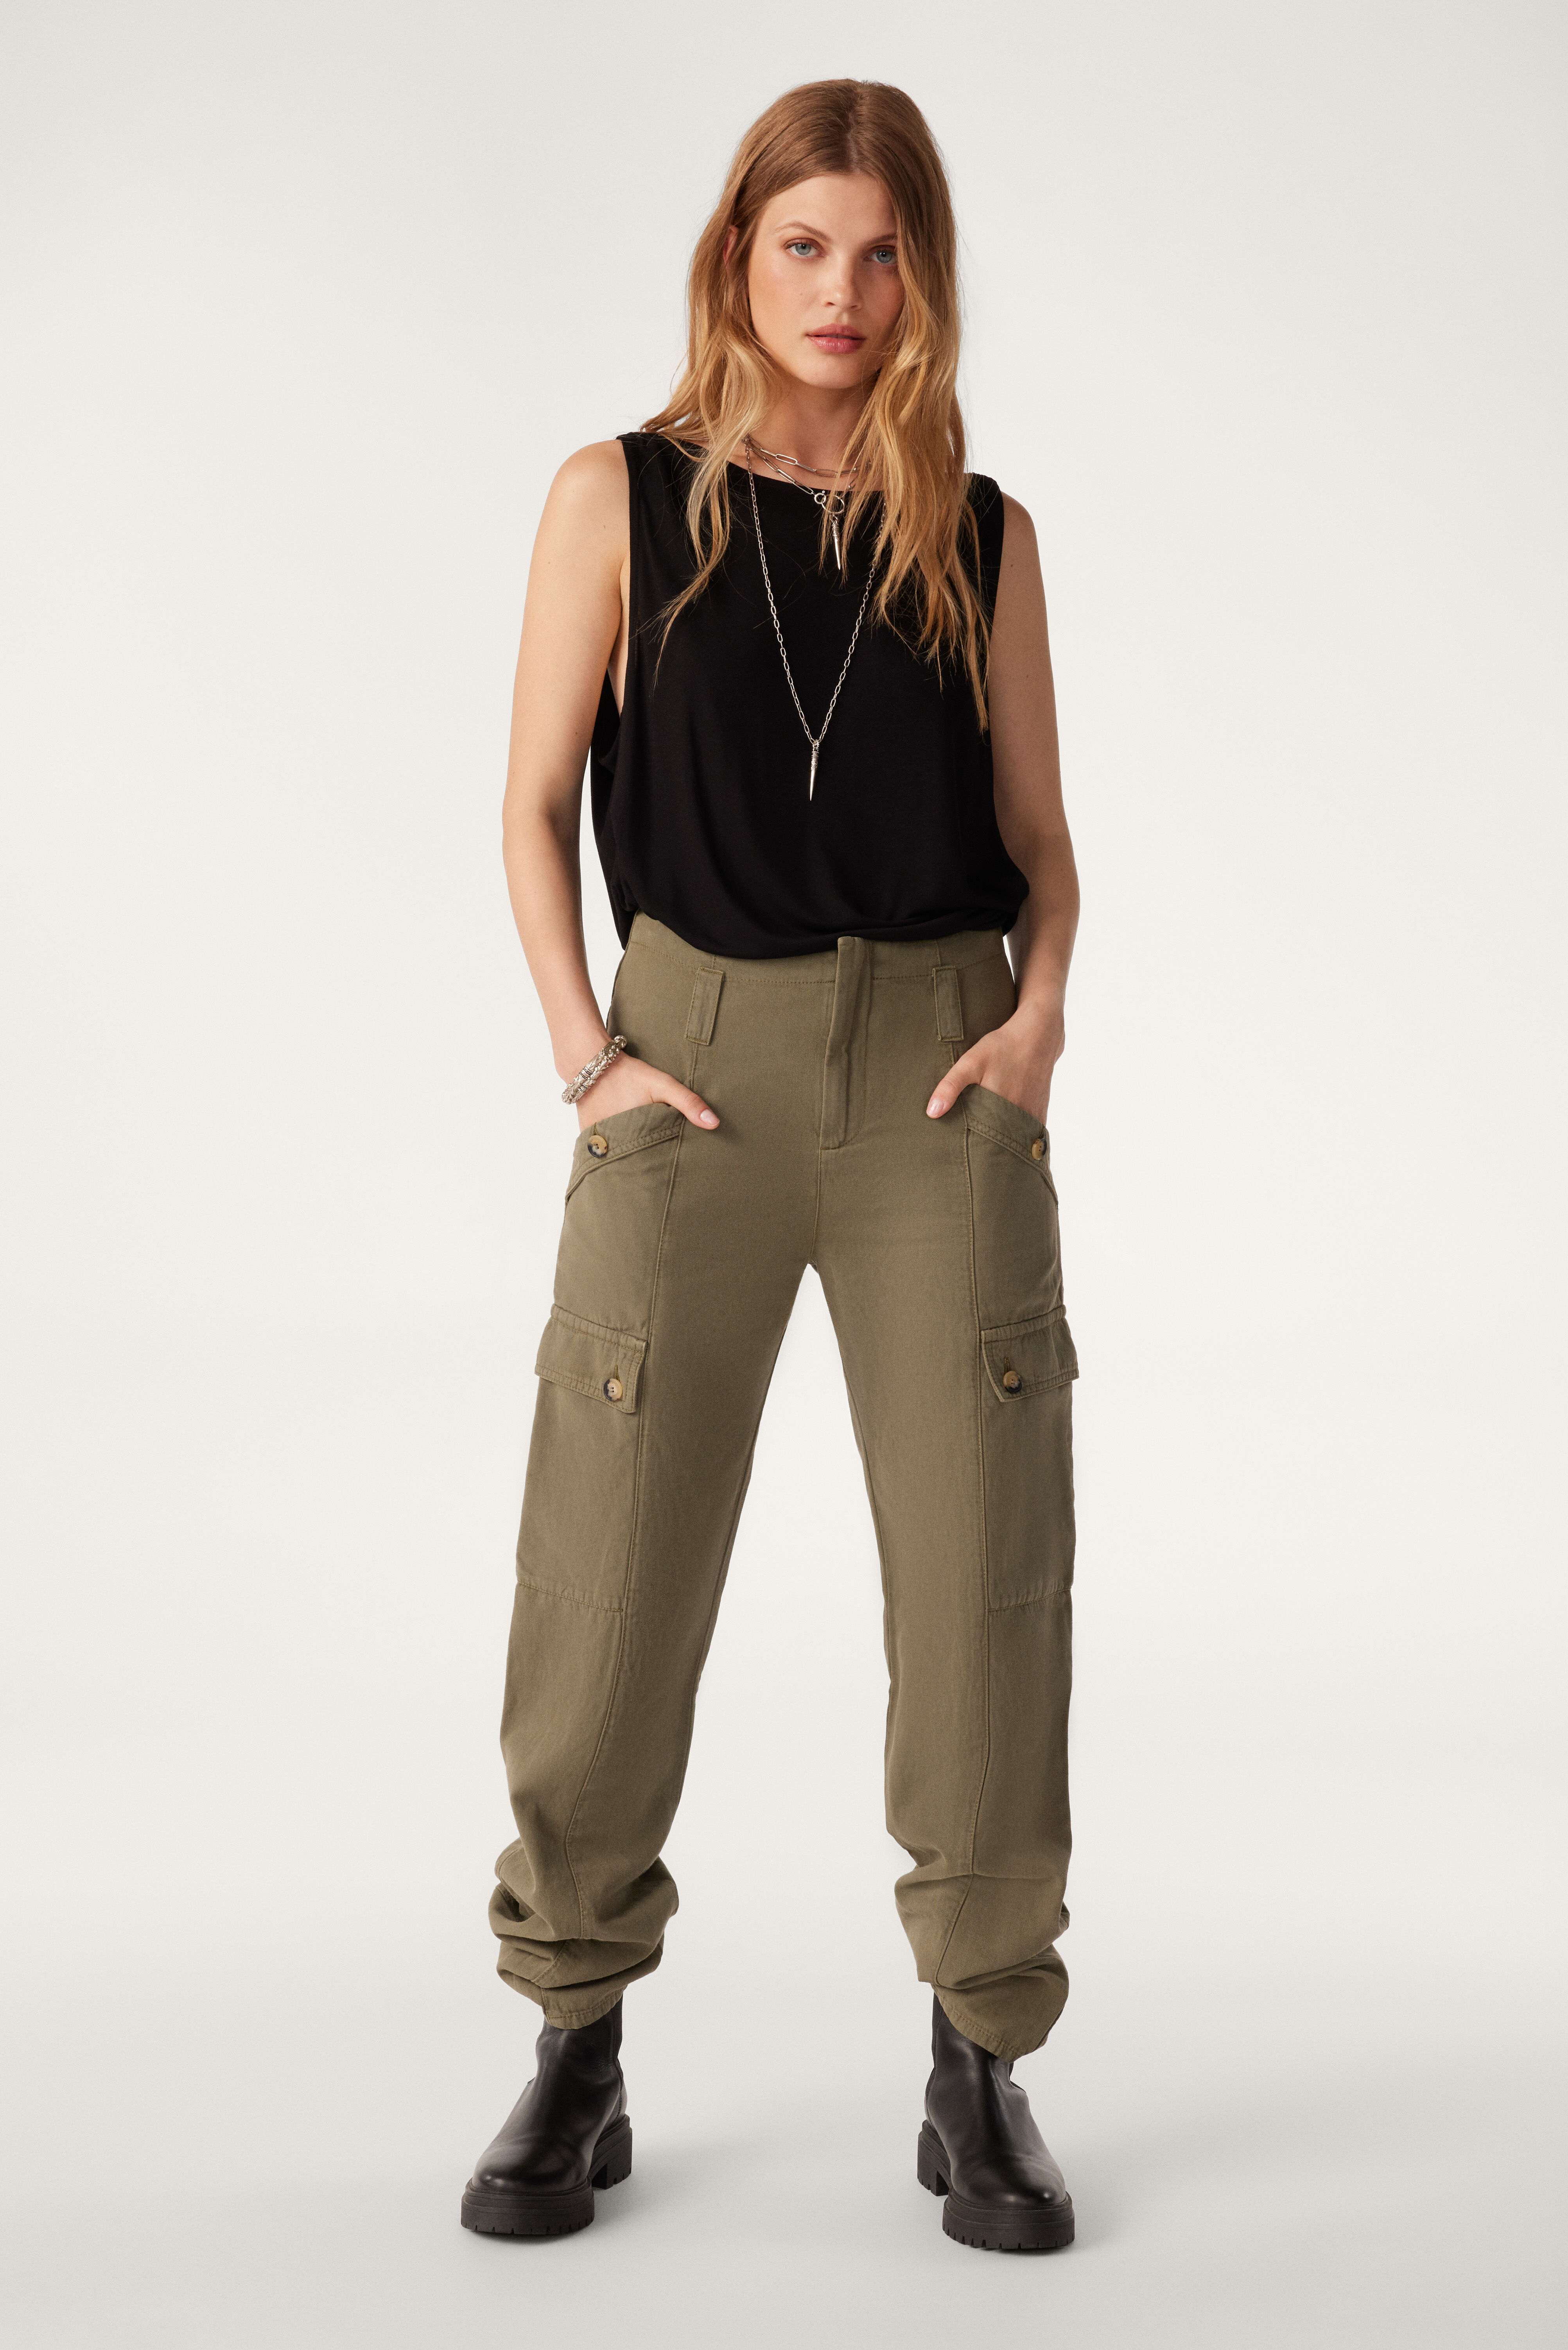 Womens Cargo Pants, Parachute Pants for Women High Waist Multi Pockets  Elastic Drawstring Wide Leg Joggers Pant (Medium, Army Green) - Walmart.com